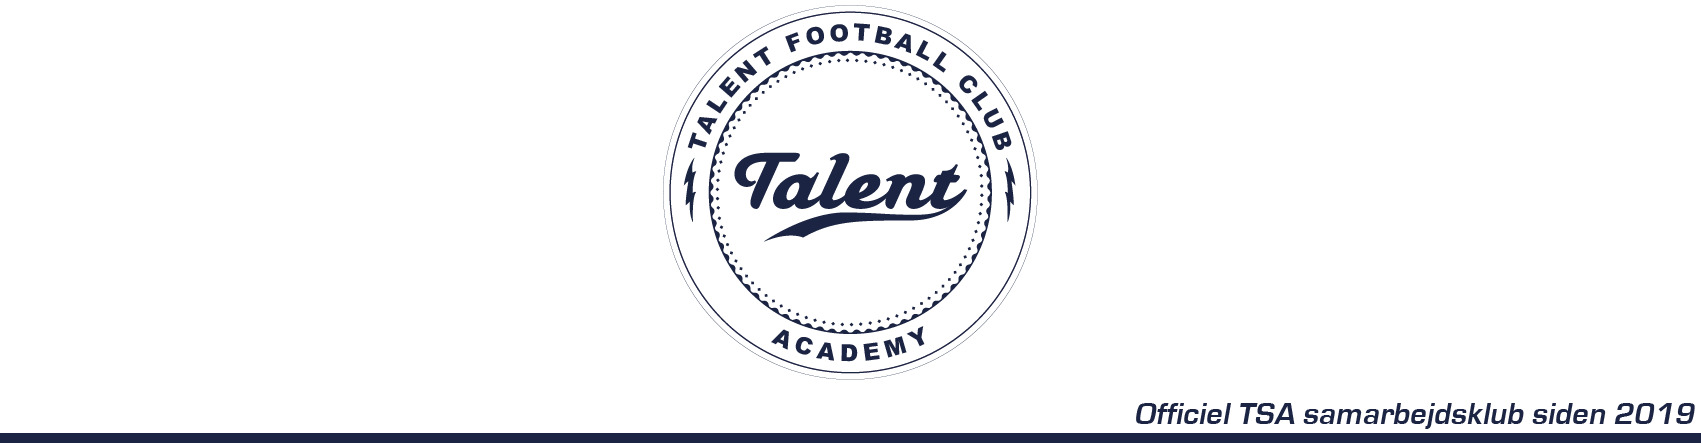 Talent_fc_academy-01